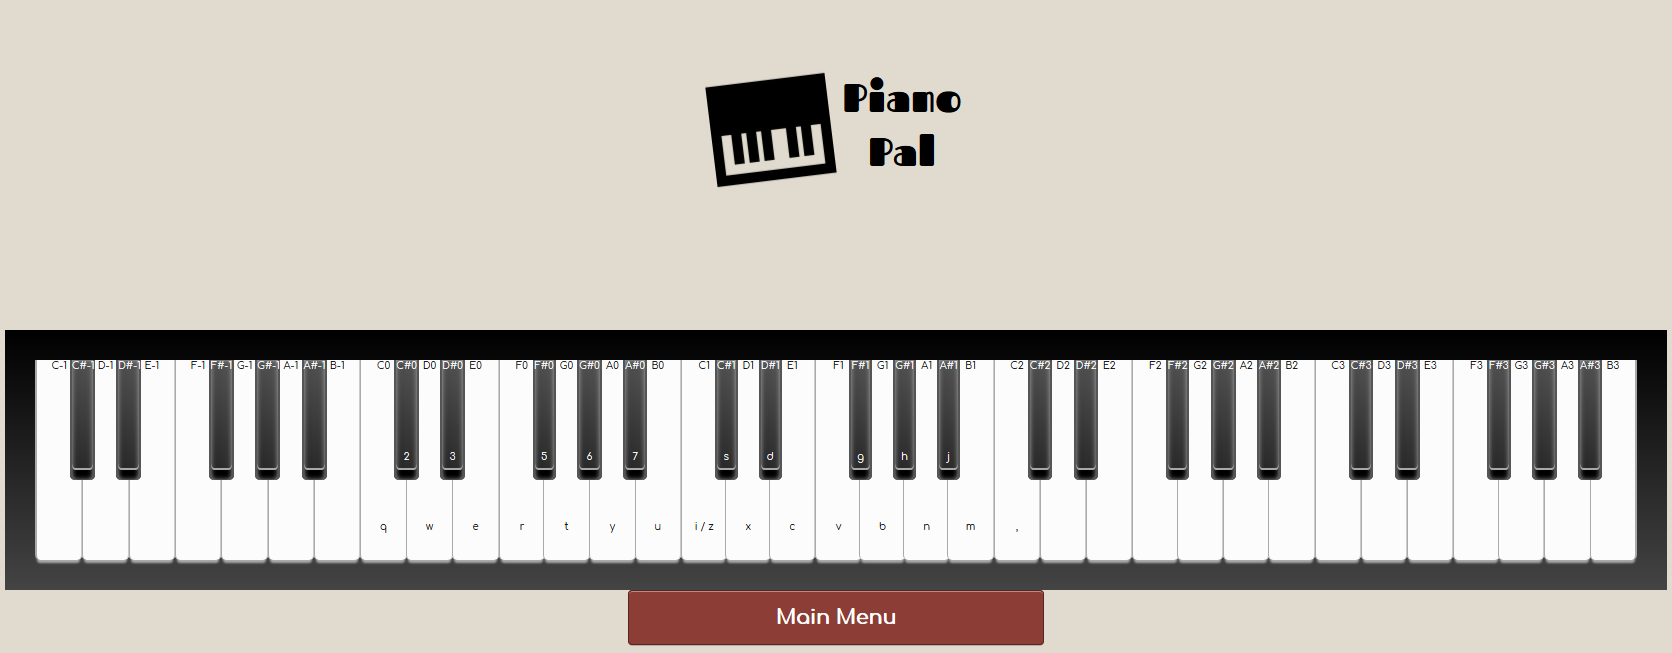 PianoPal keyboard